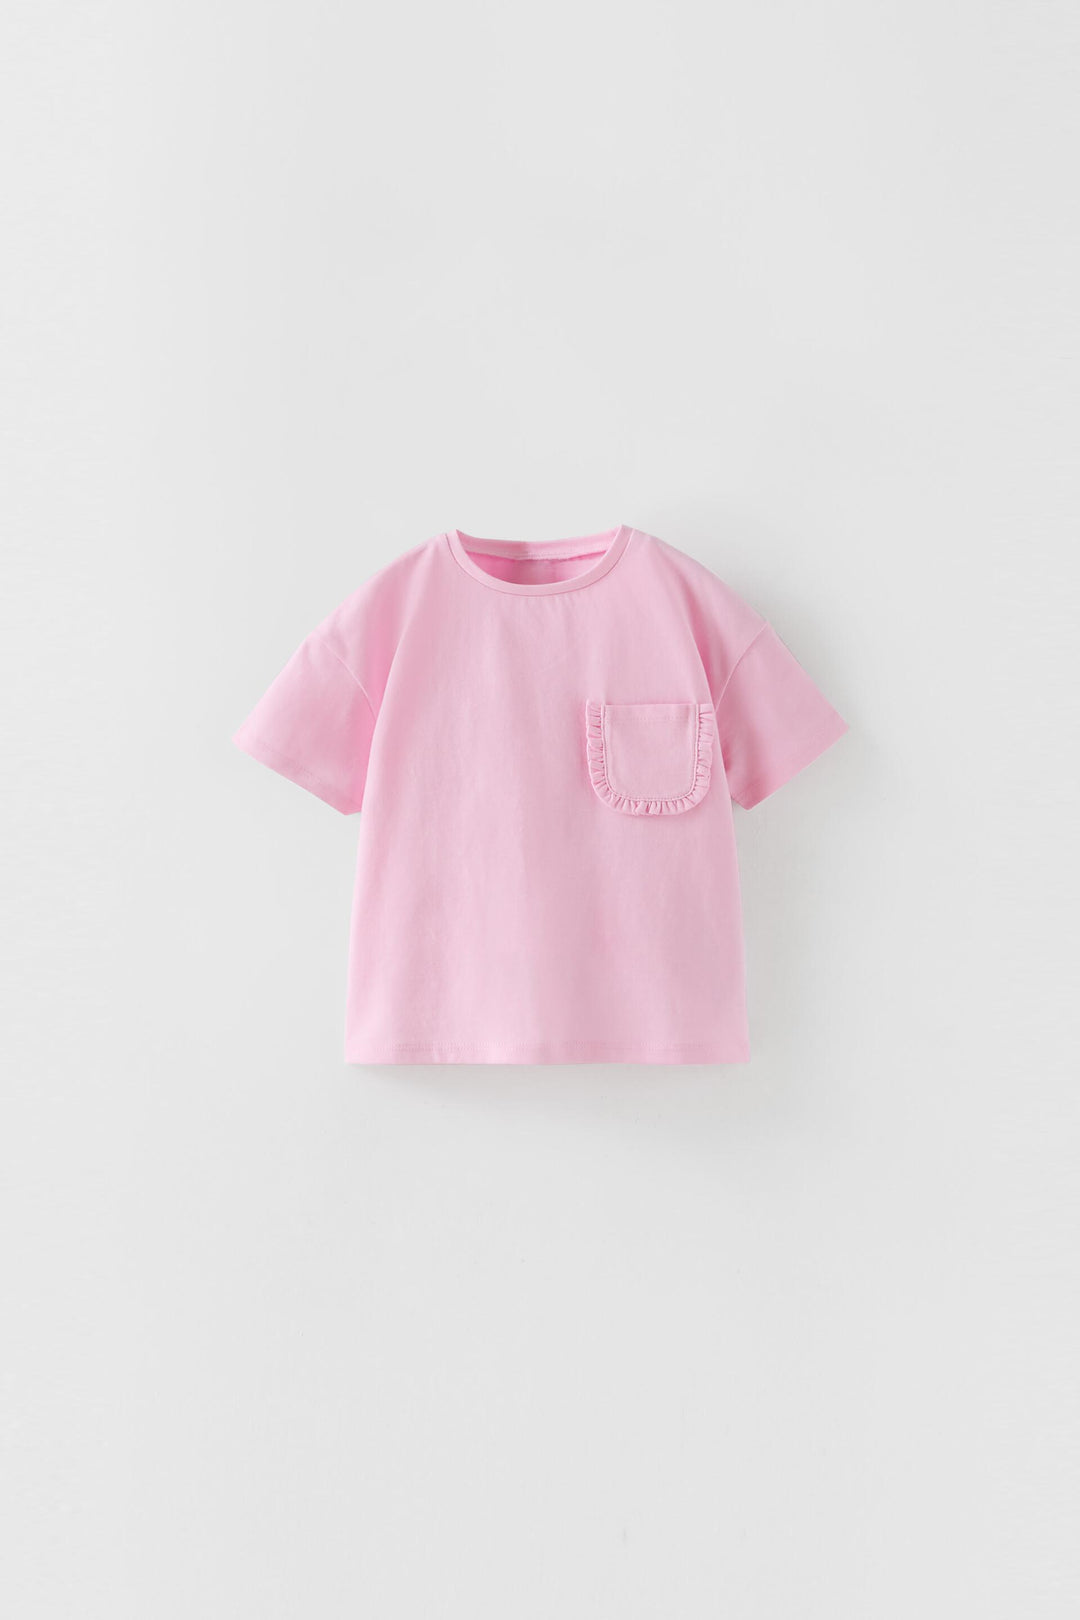 T-Shirt Bebe marque_Zara, genre_Fille, Enfant Moudda Tunisie1